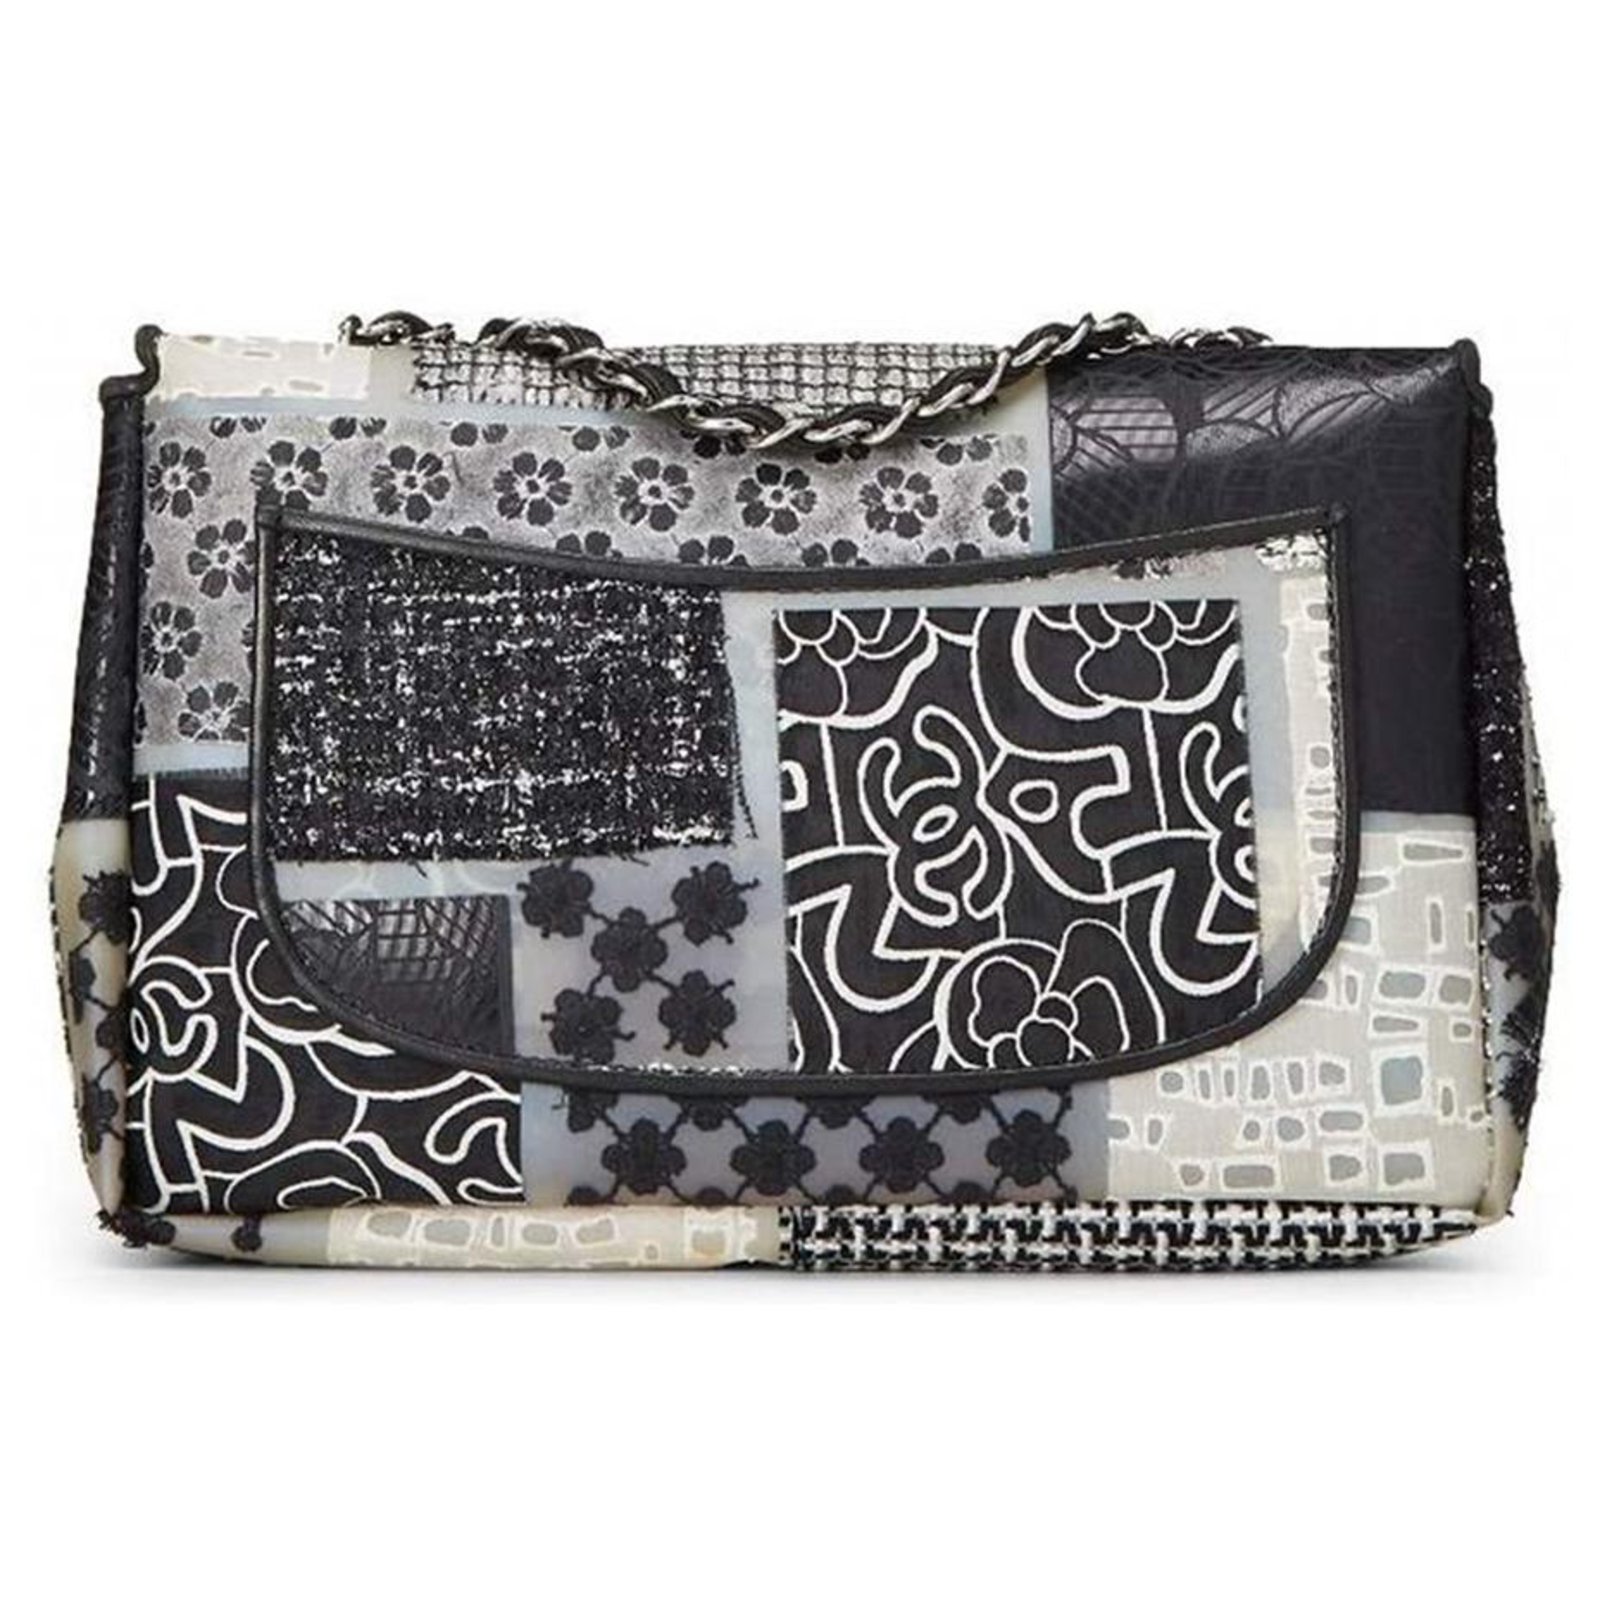 Chanel Patchwork Tweed PVC Classic Single Flap Handbag